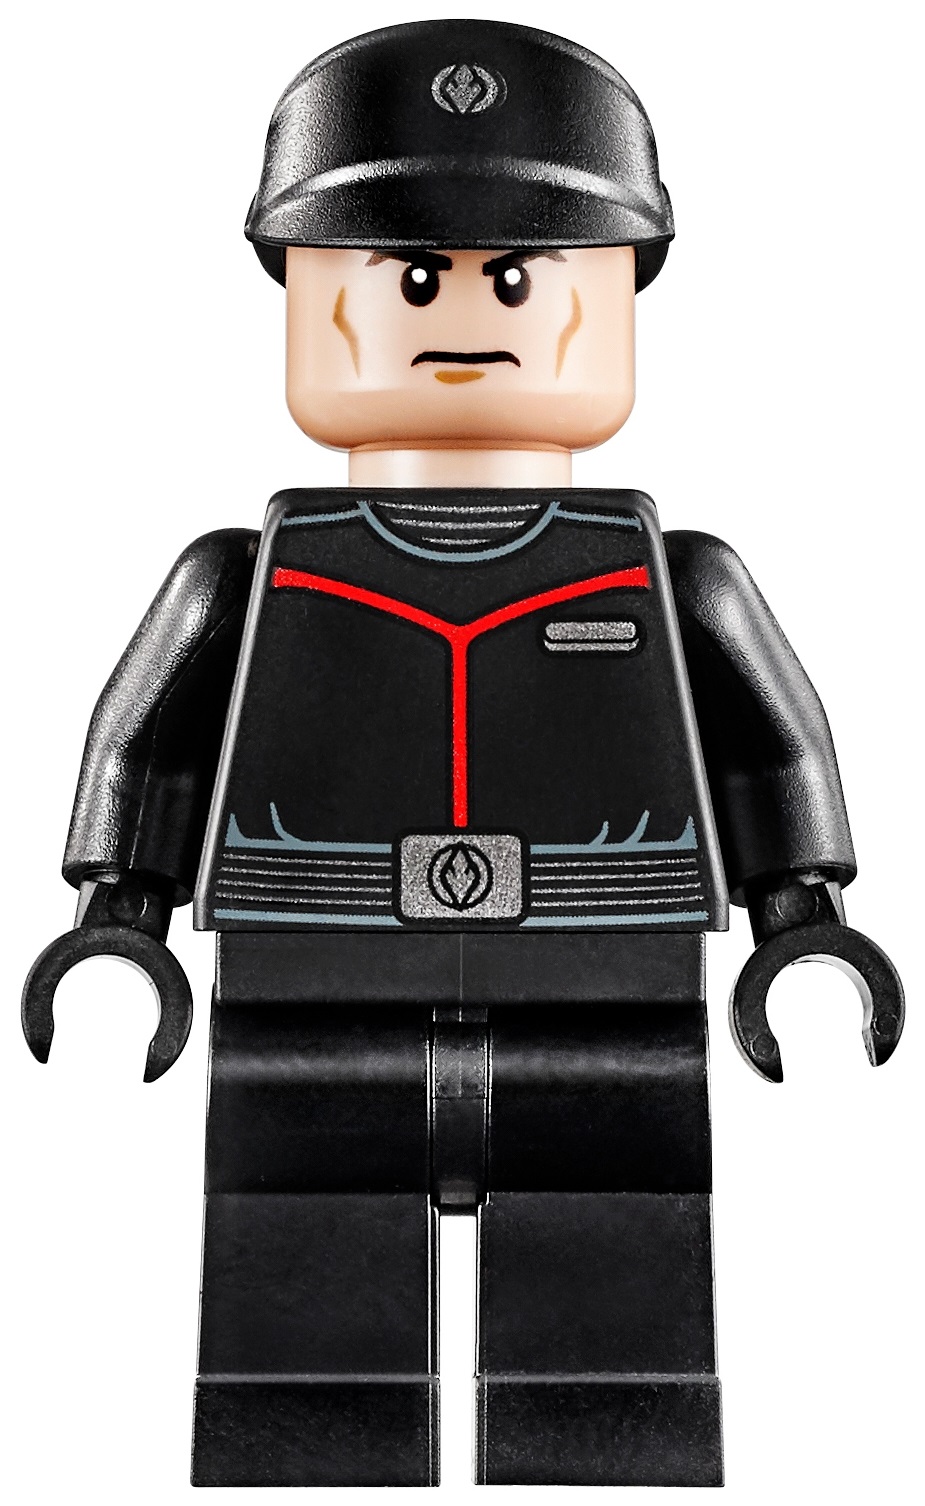 MINIFIGURA FIRST ORDER OFFICER 75101 ORIGINAL MINIFIGURE LEGO STAR WARS 